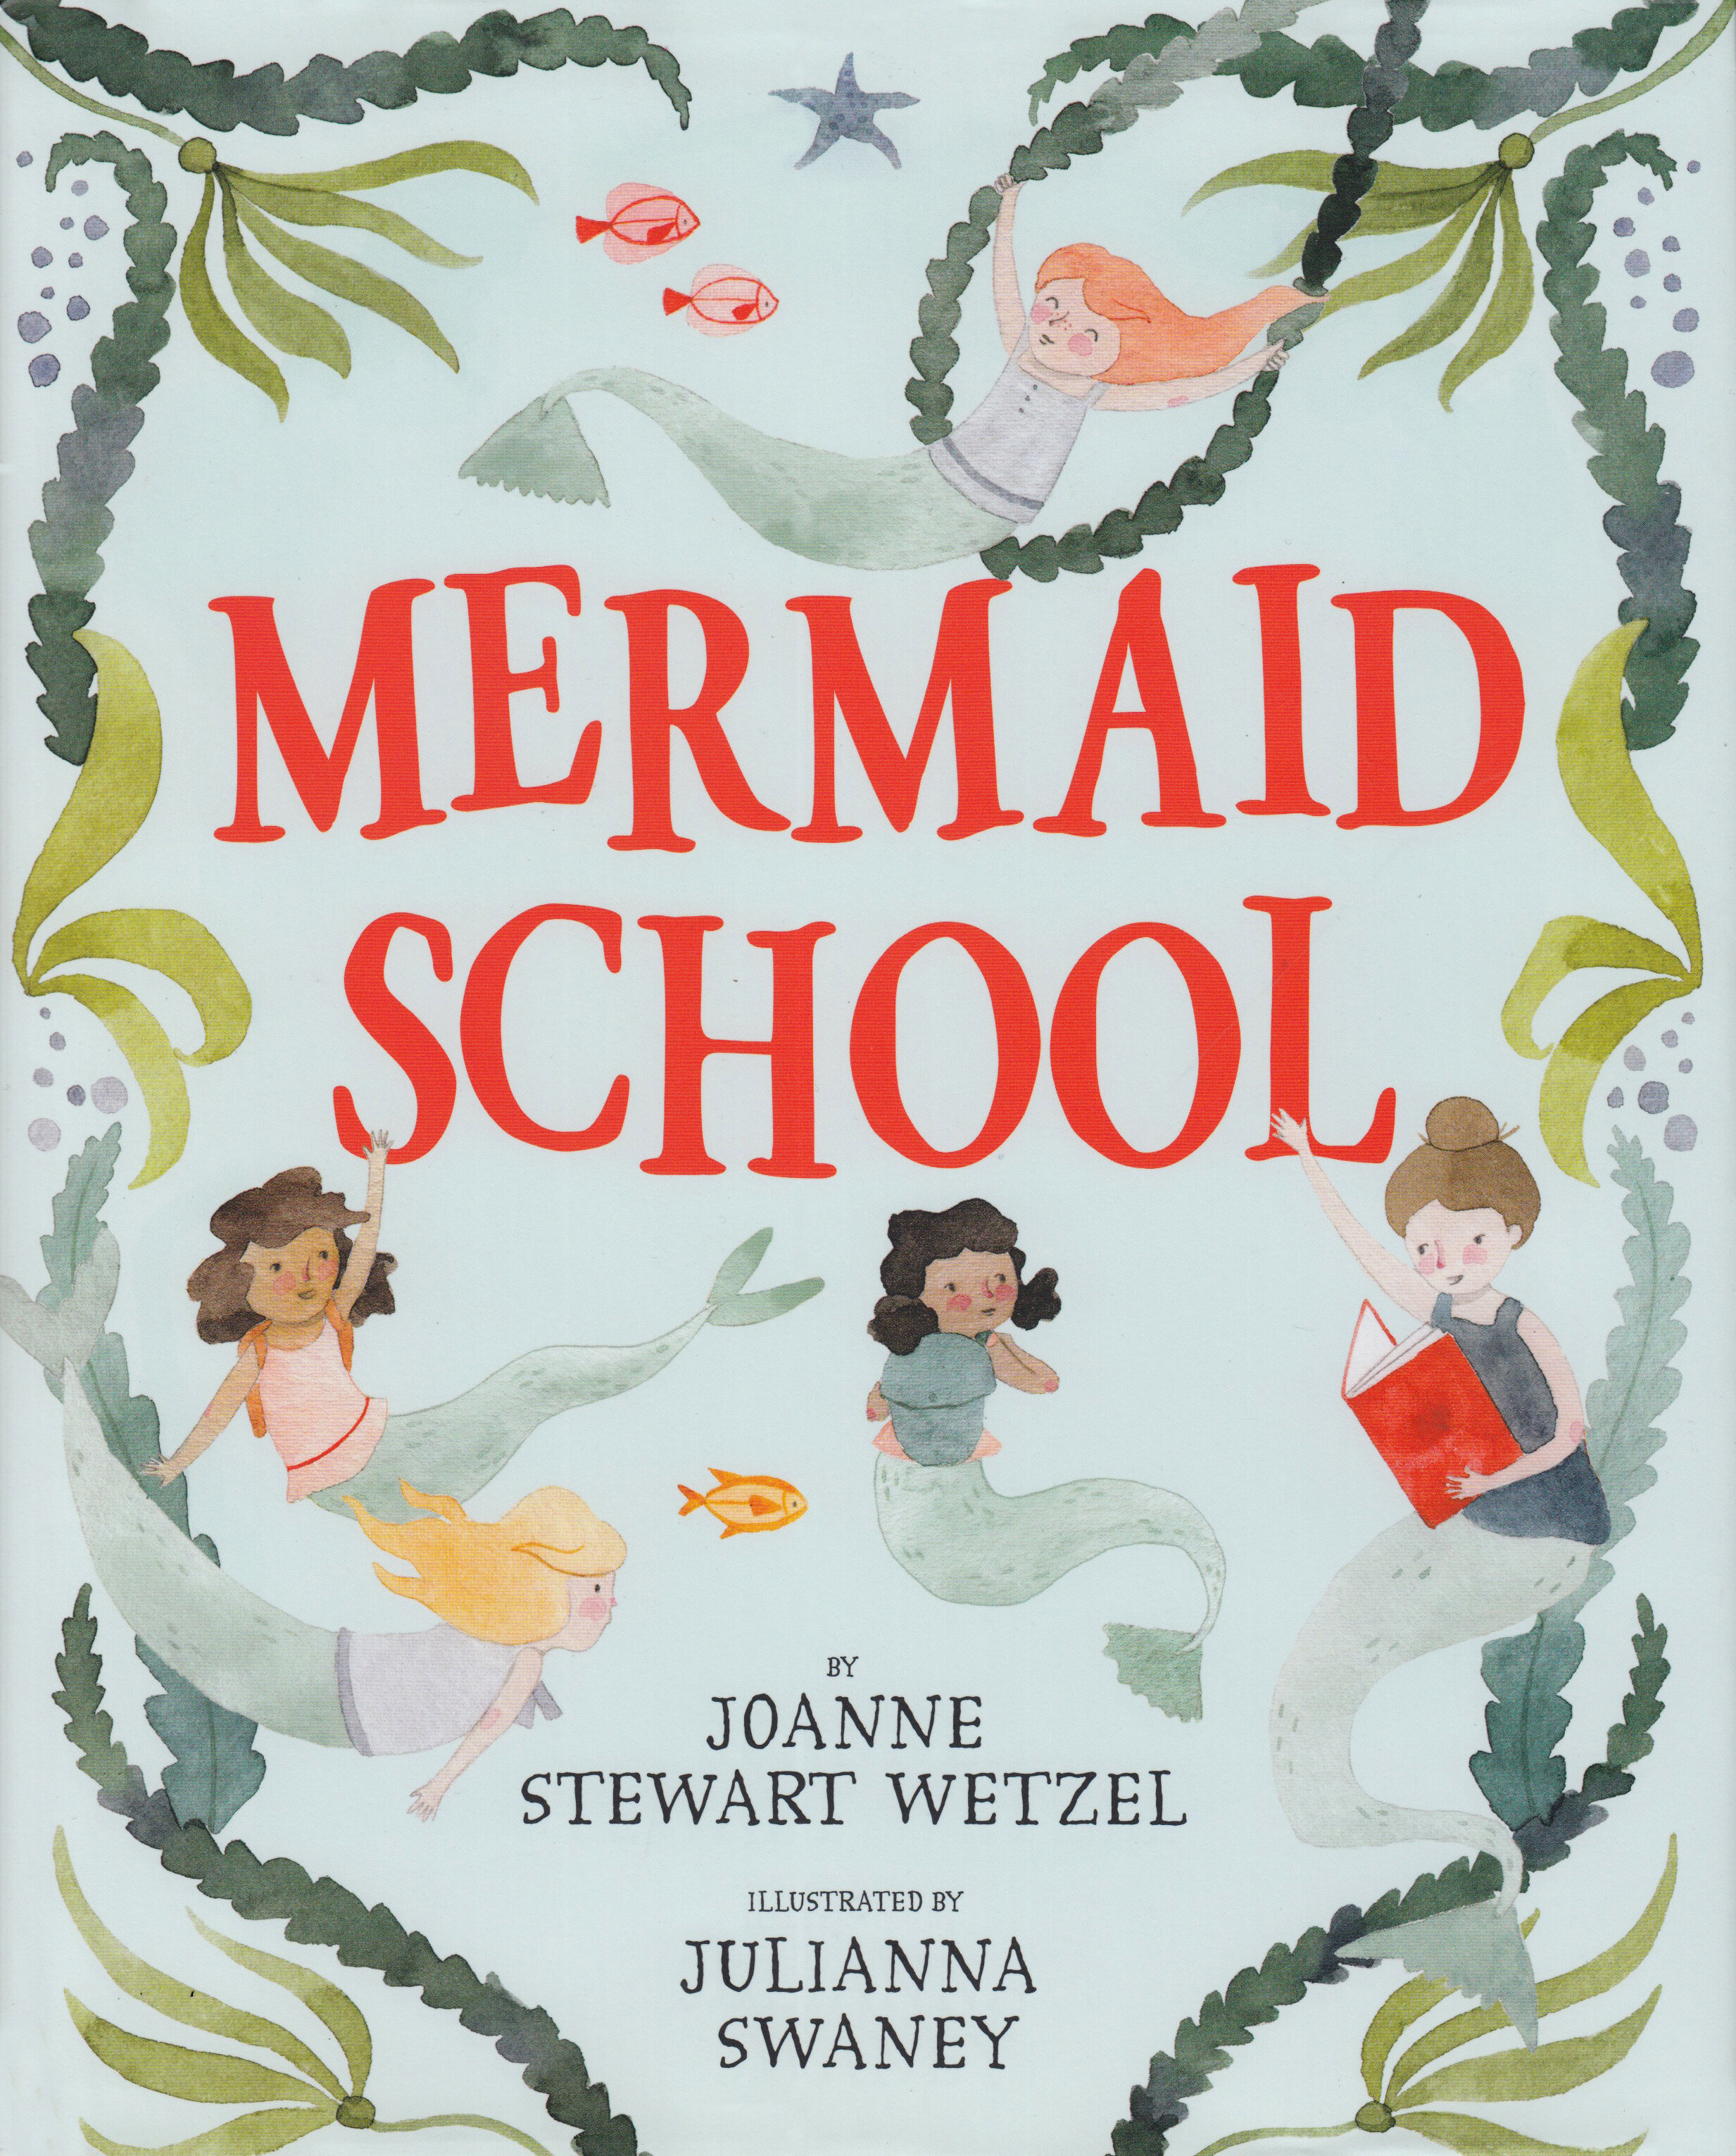 Mermaid-school-publishers-cover.jpg